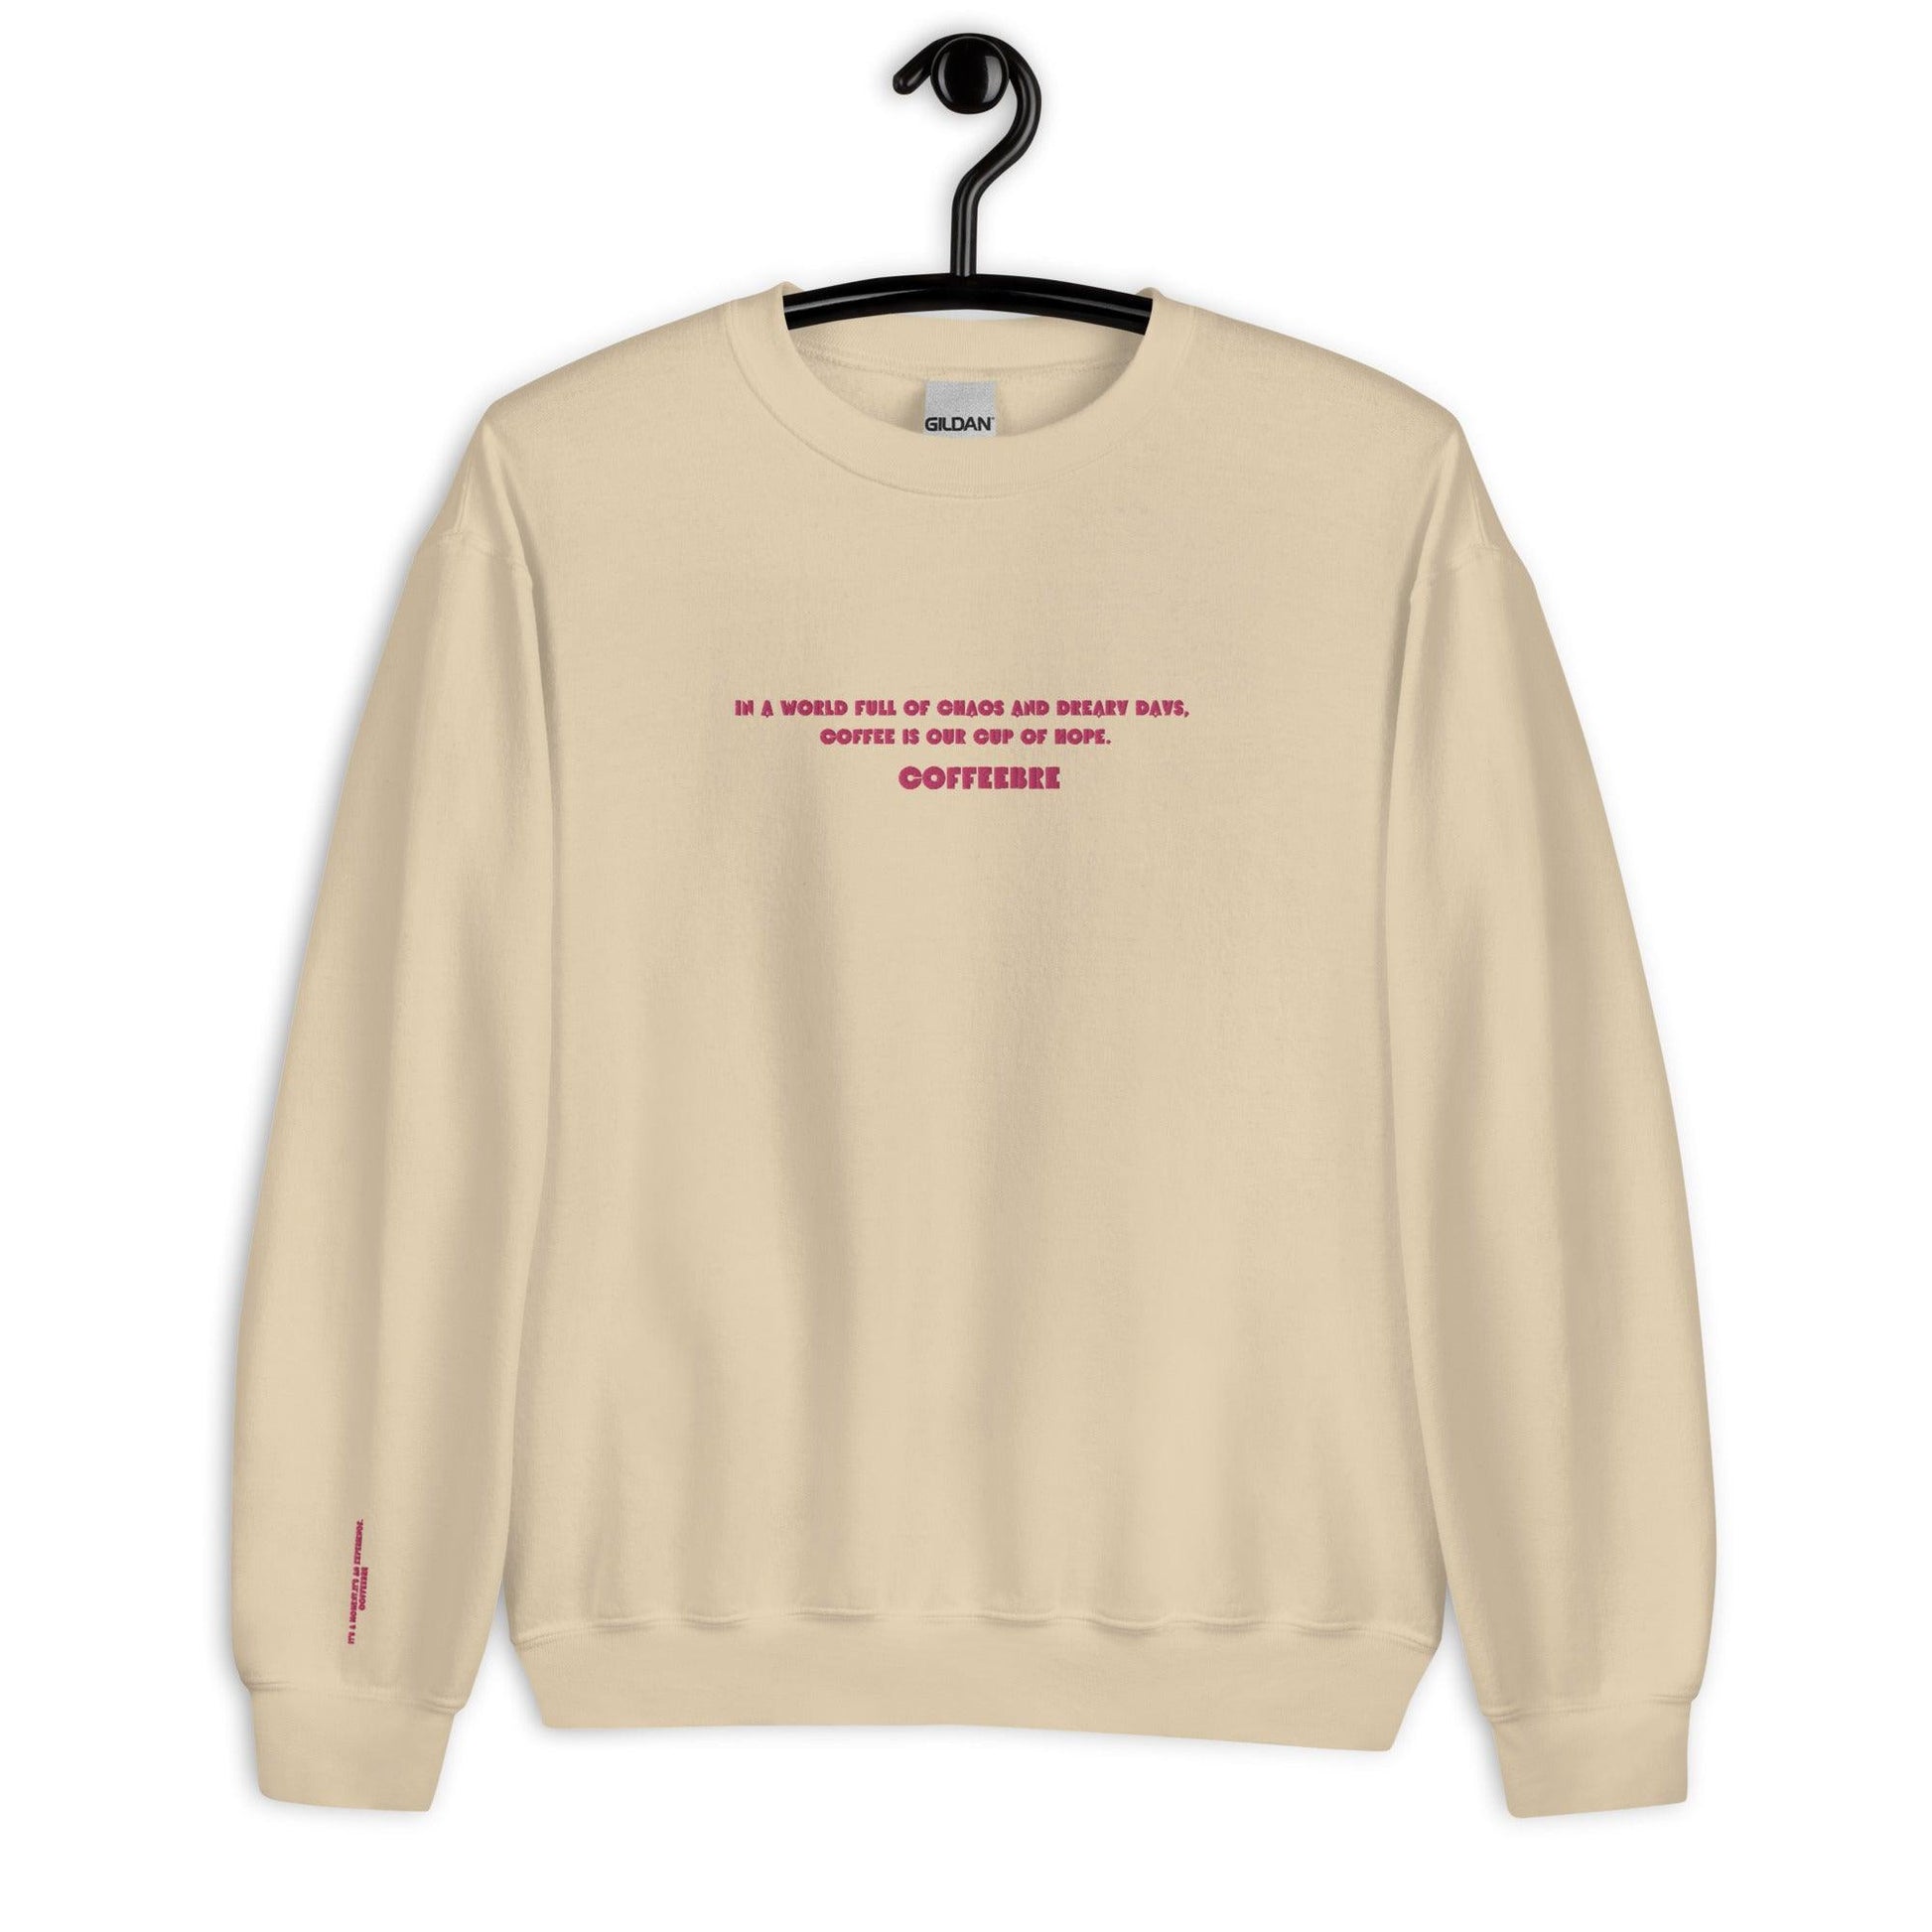 Embroidered Comfy Unisex Sweatshirt - COFFEEBRE